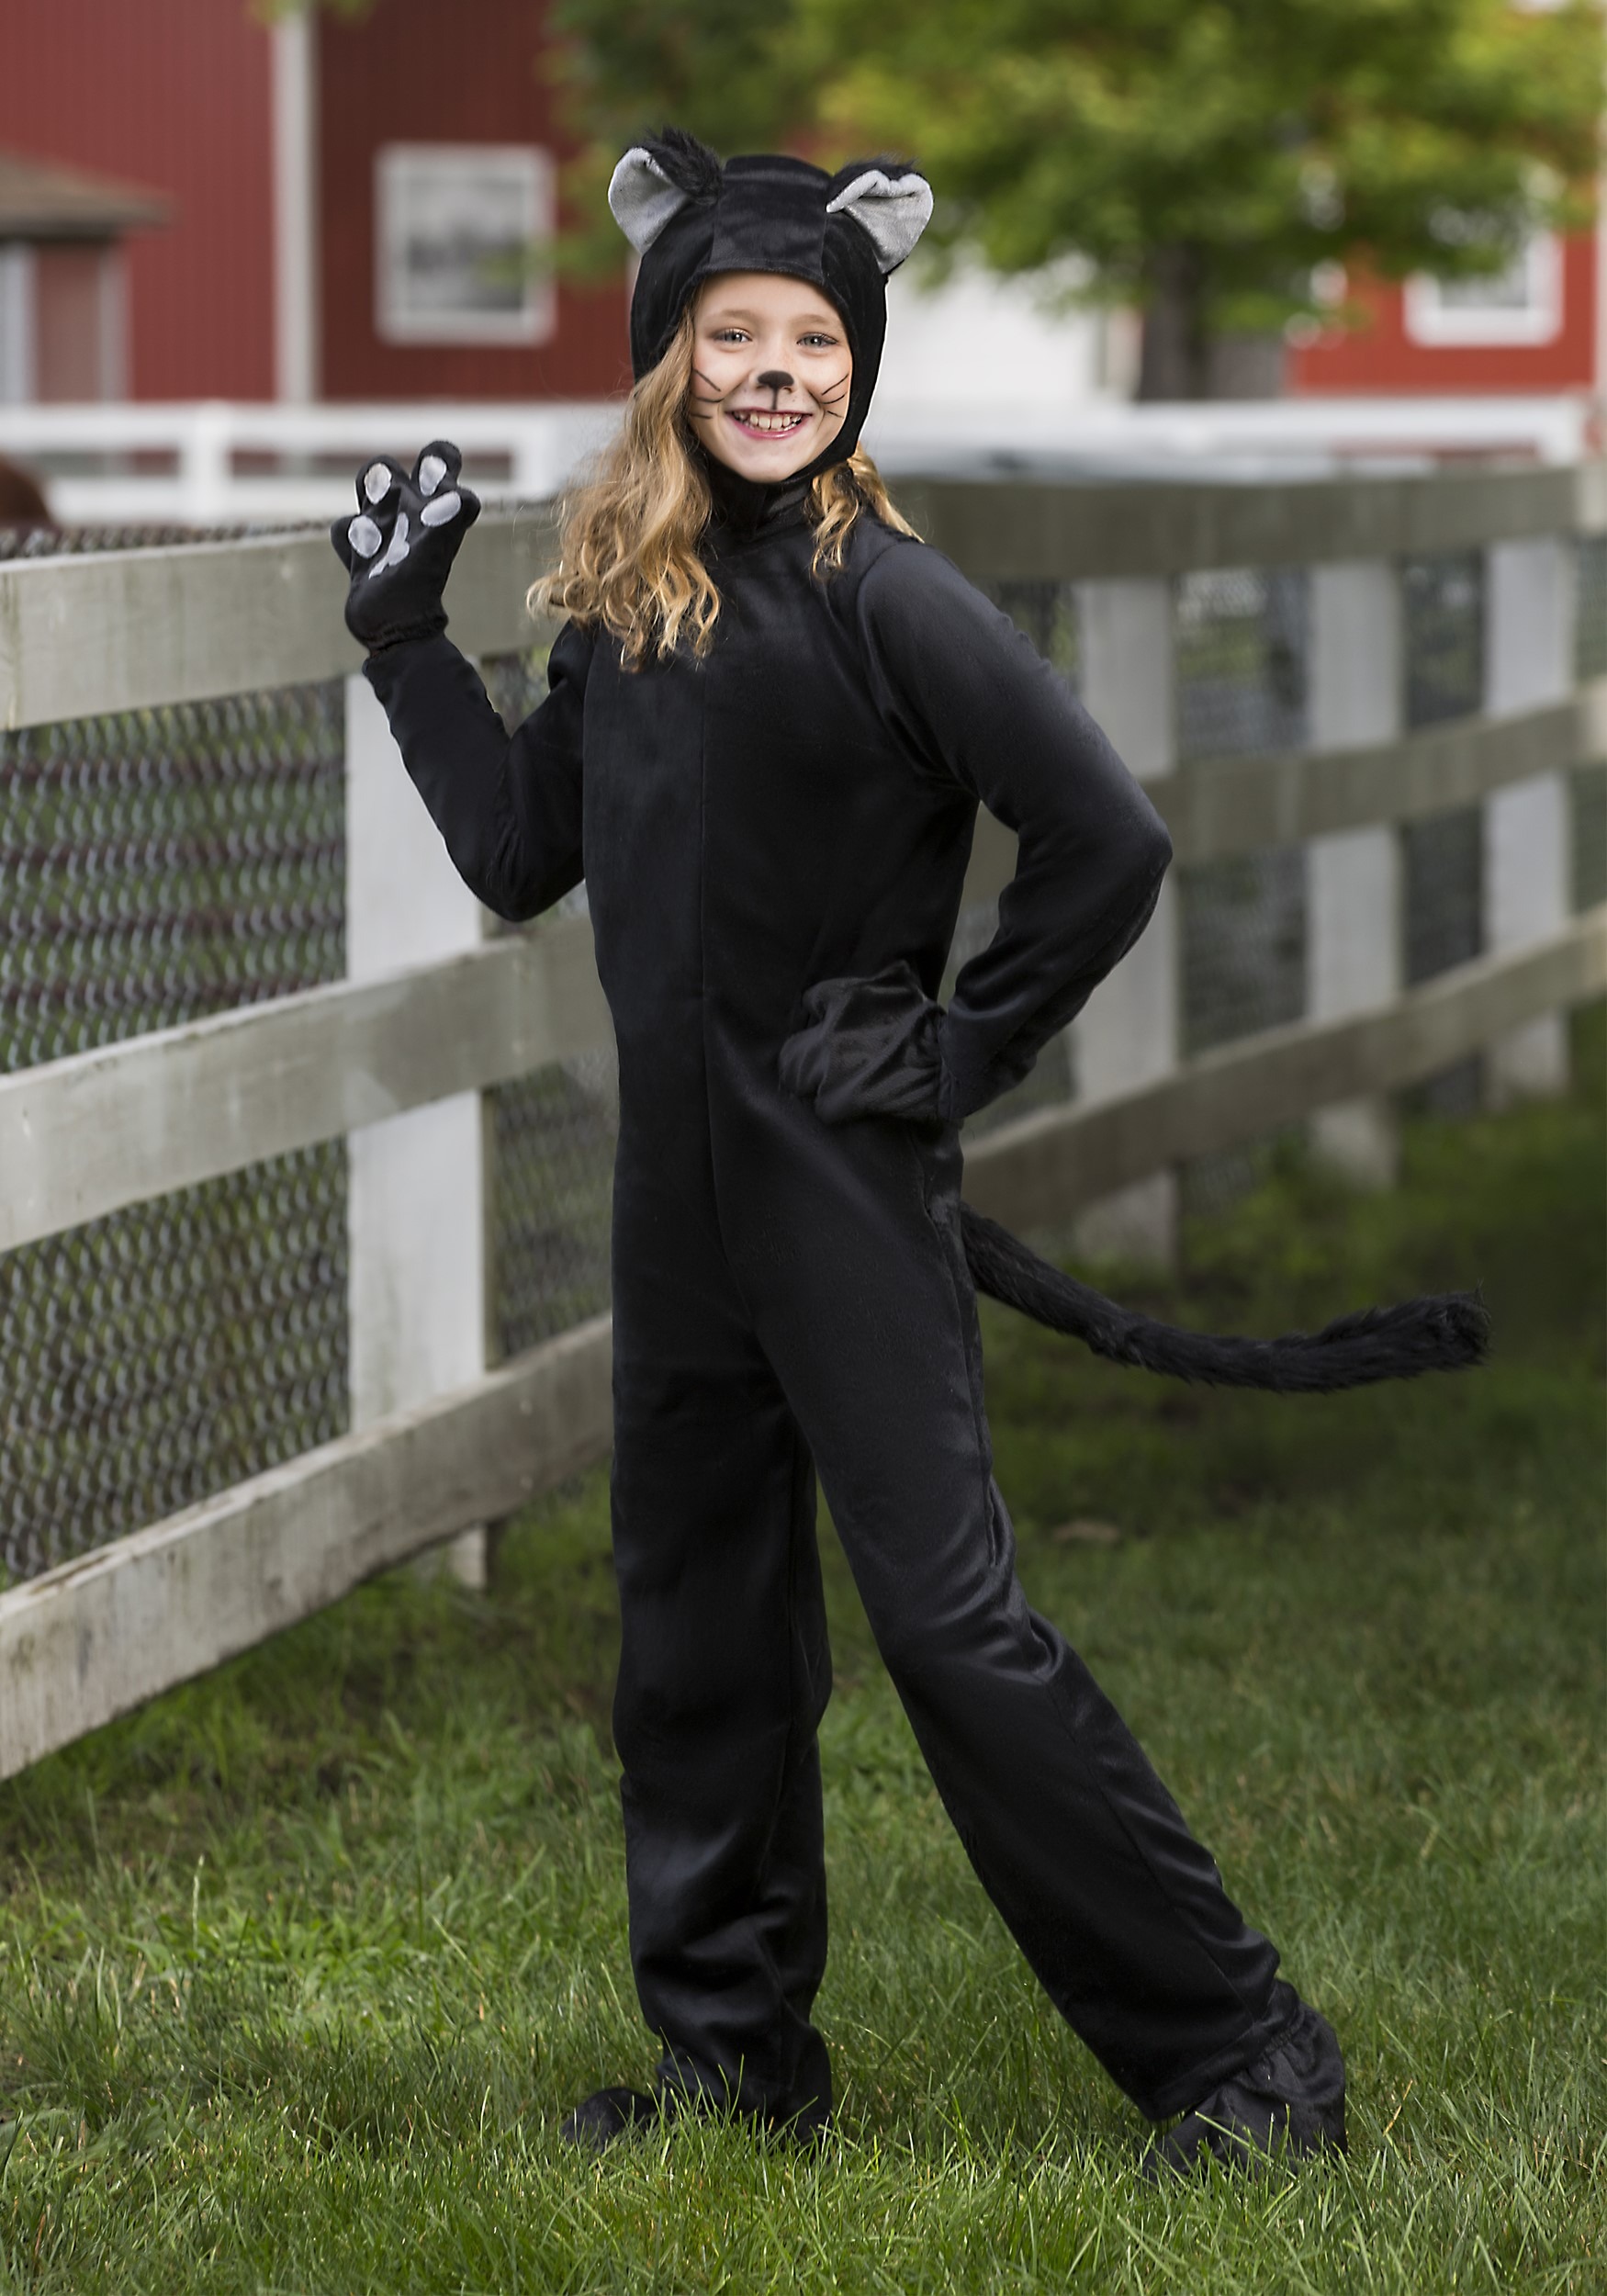 Black Cat Kids Costume , Warm Halloween Costume